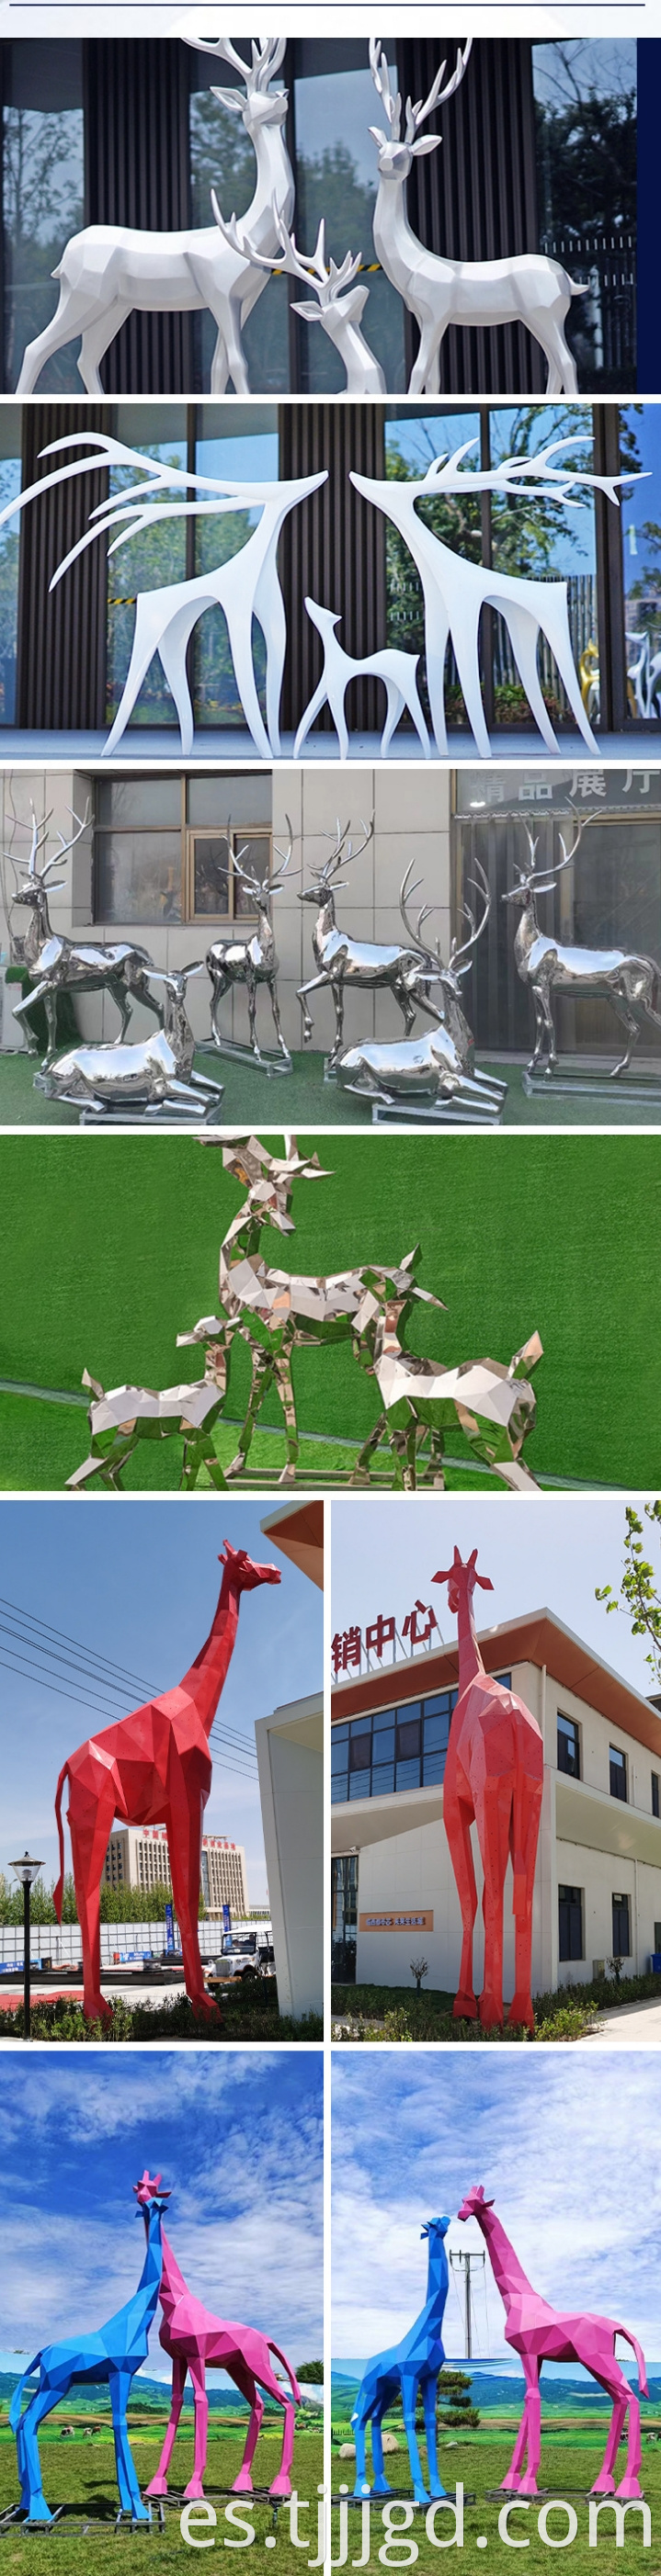 Outdoor Simulation Animal Sculpture